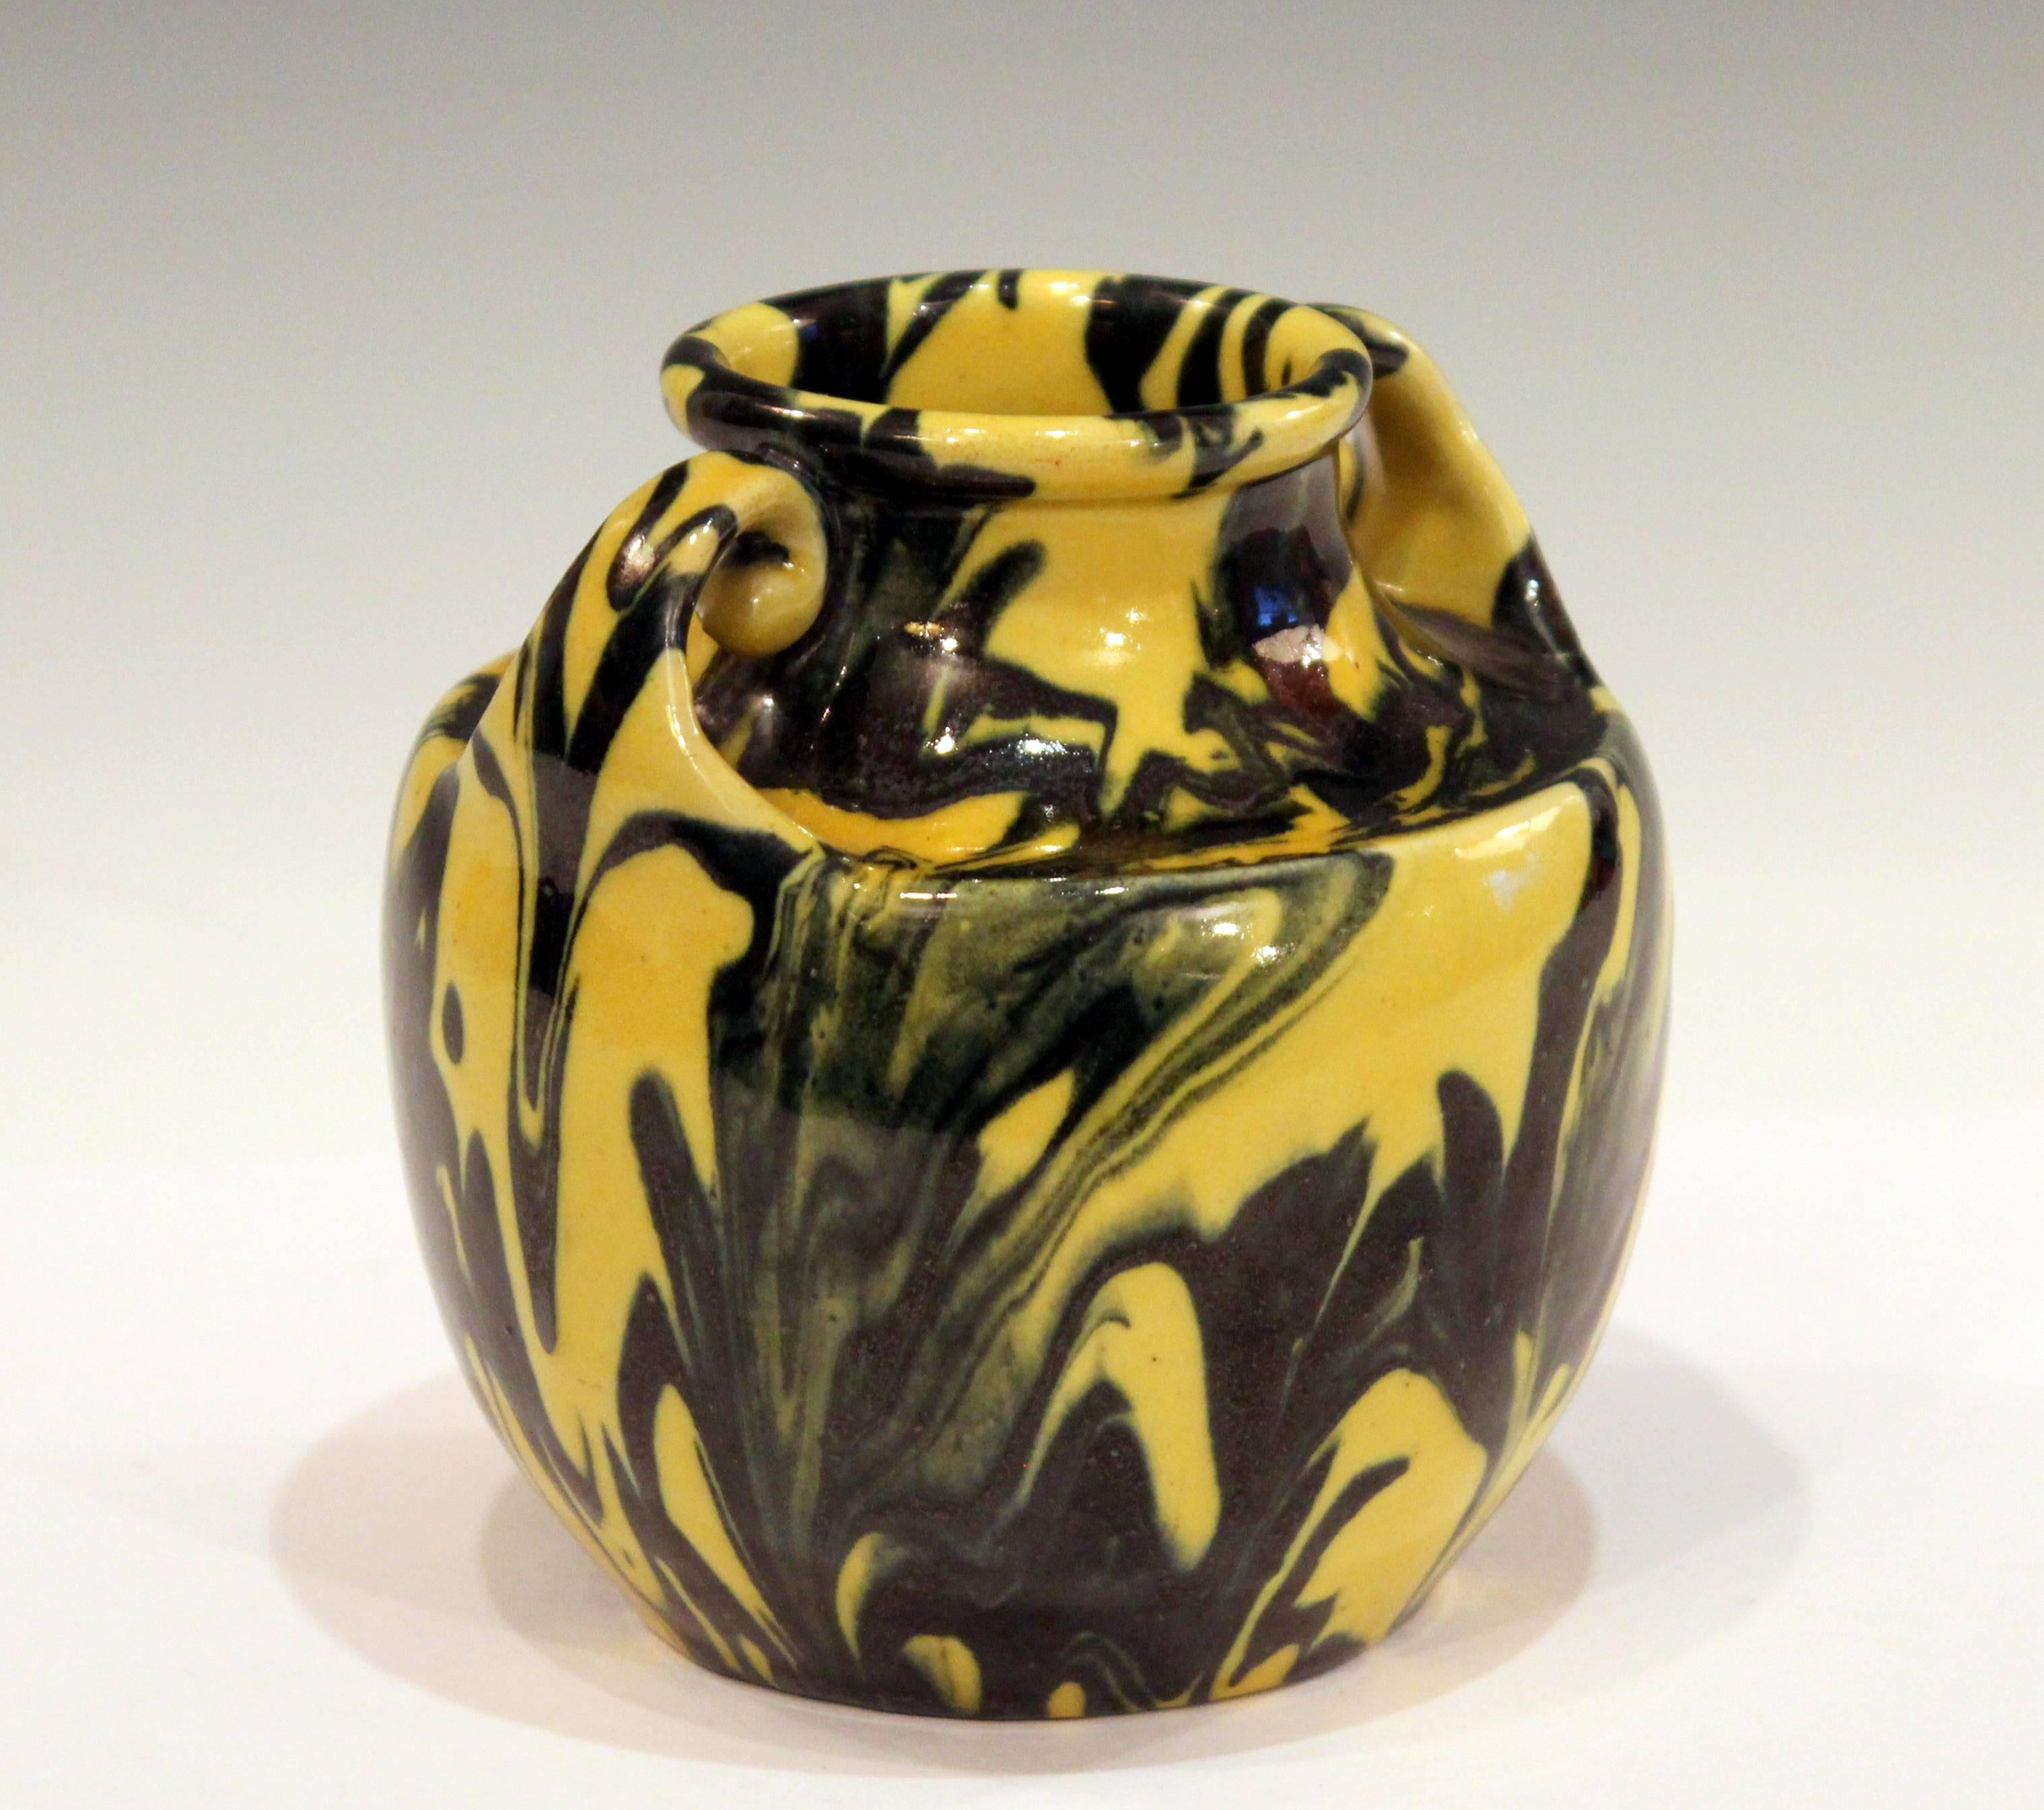 Turned Awaji Pottery Art Deco Studio Japanese Marbled Metallic Yellow and Black Vase